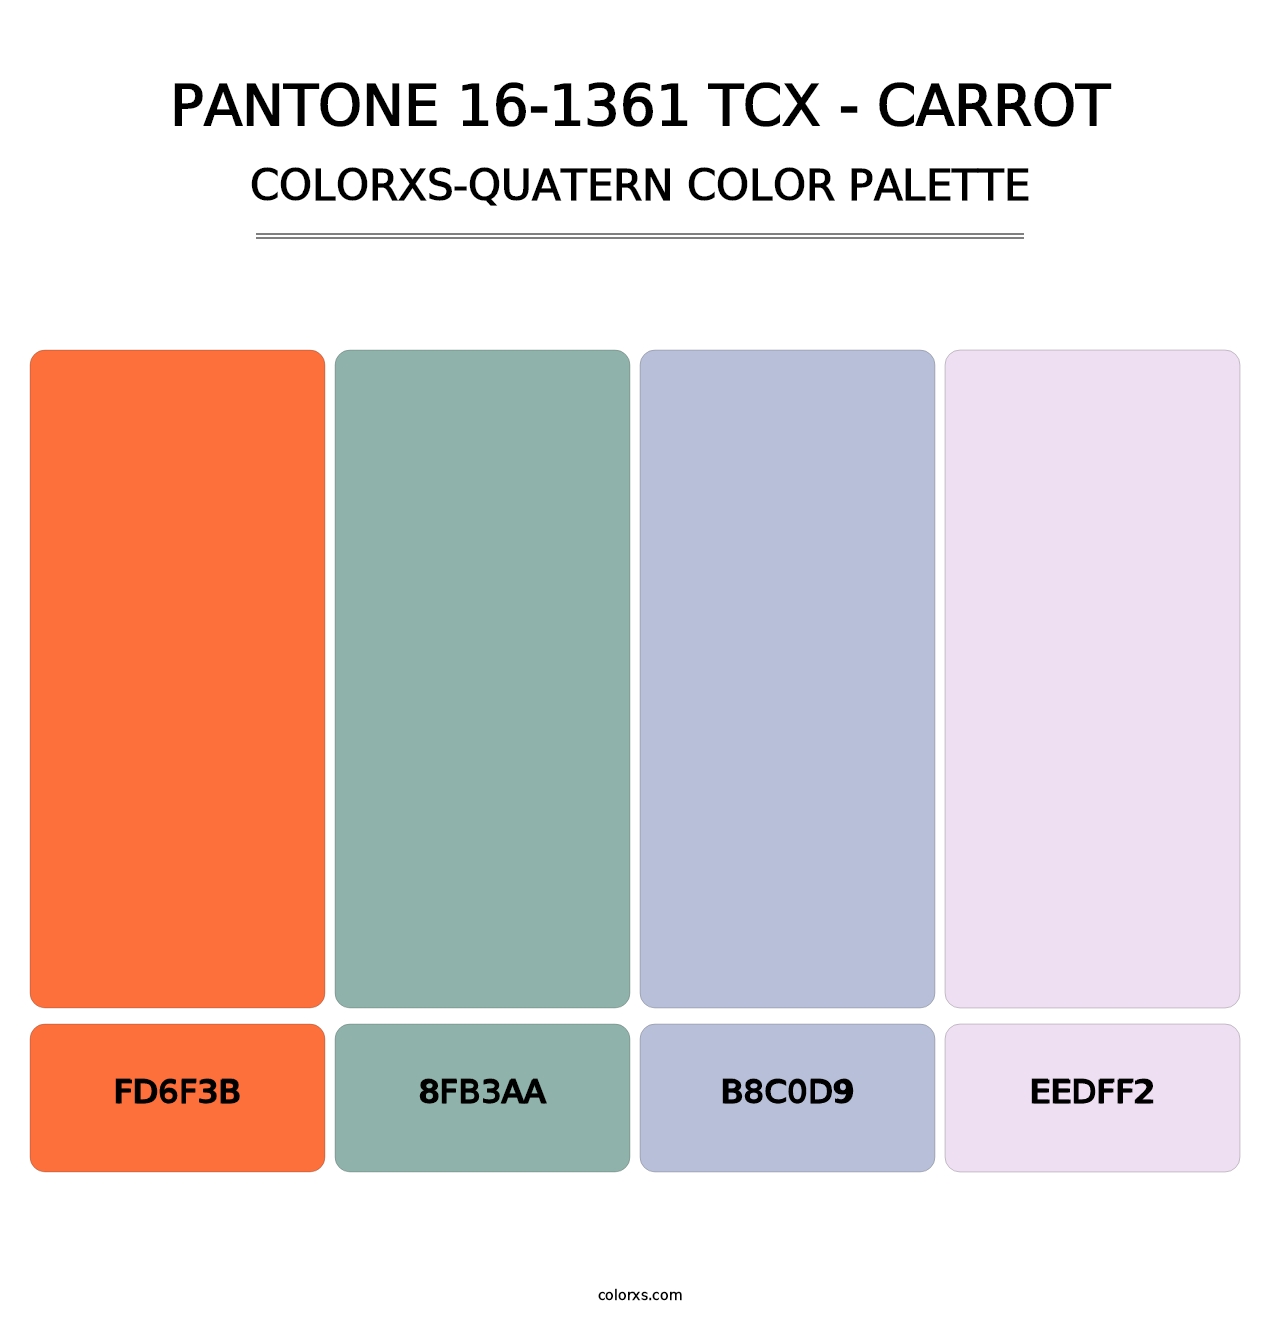 PANTONE 16-1361 TCX - Carrot - Colorxs Quatern Palette